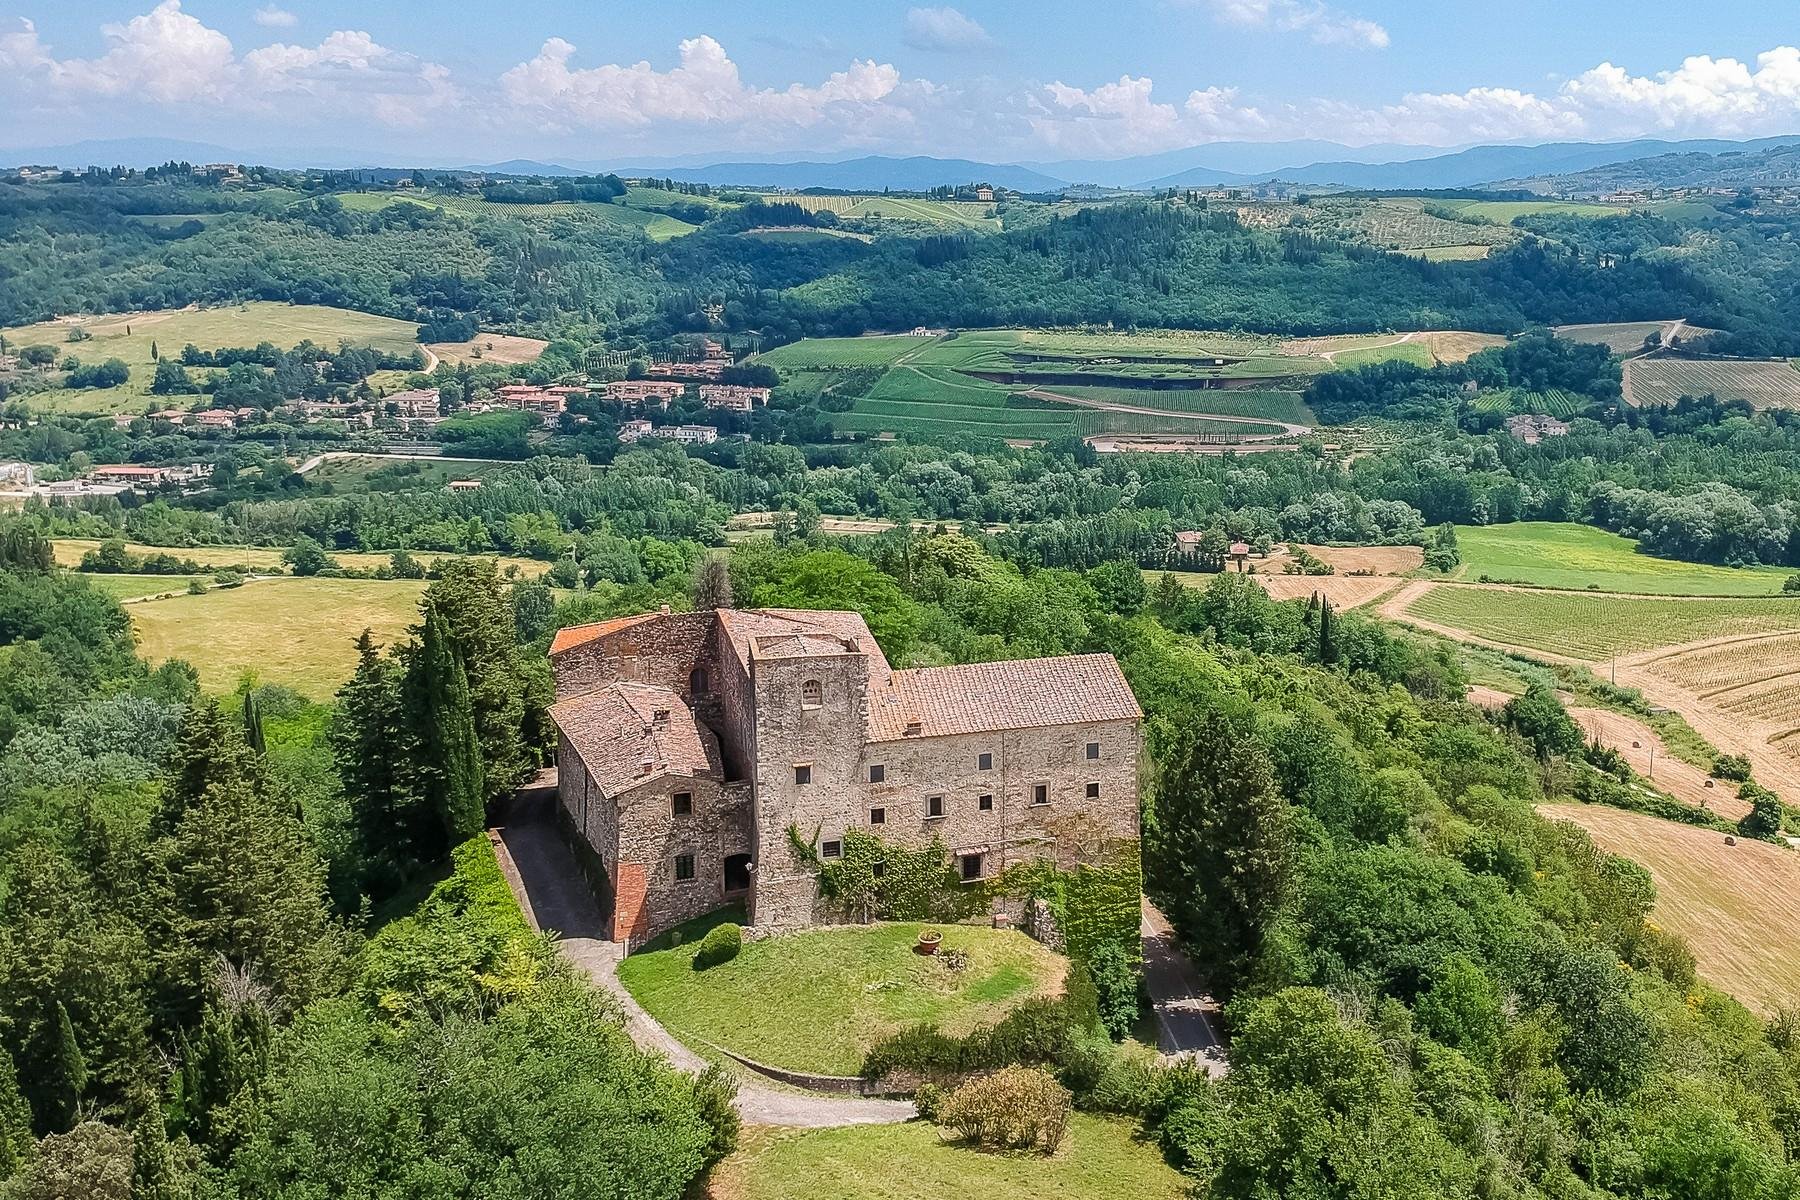 Francis York Medieval Castle Turned Renaissance Villa in Tuscany, Italy  00033.jpg